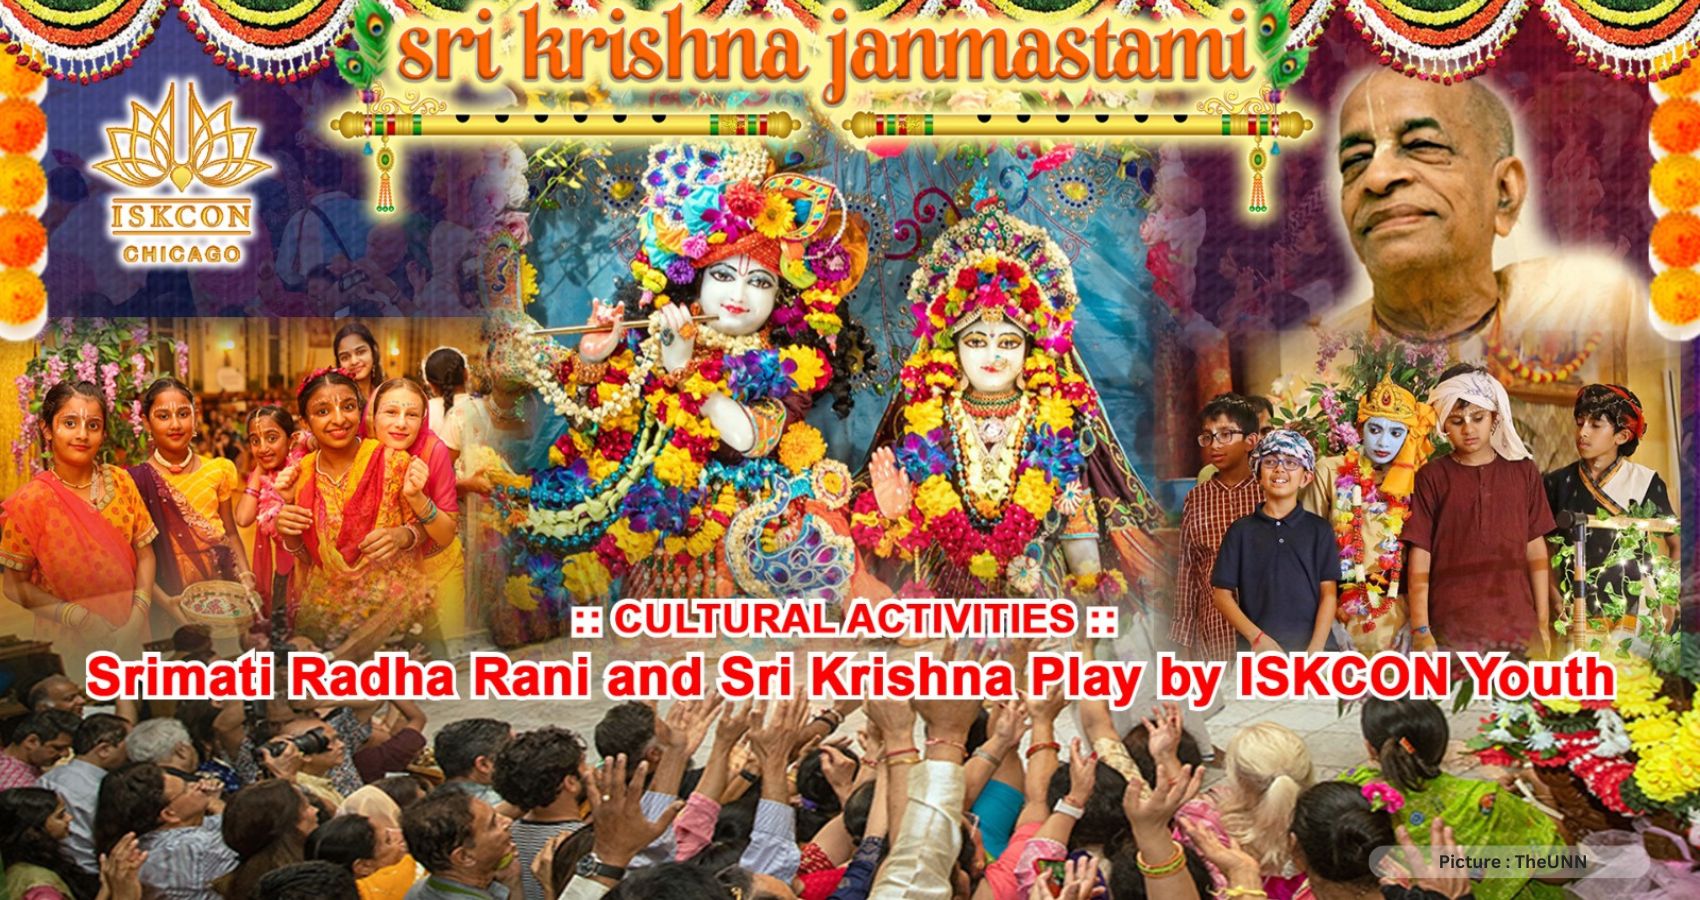 Krishna Temple of Midwest Celebrates Janmashtami